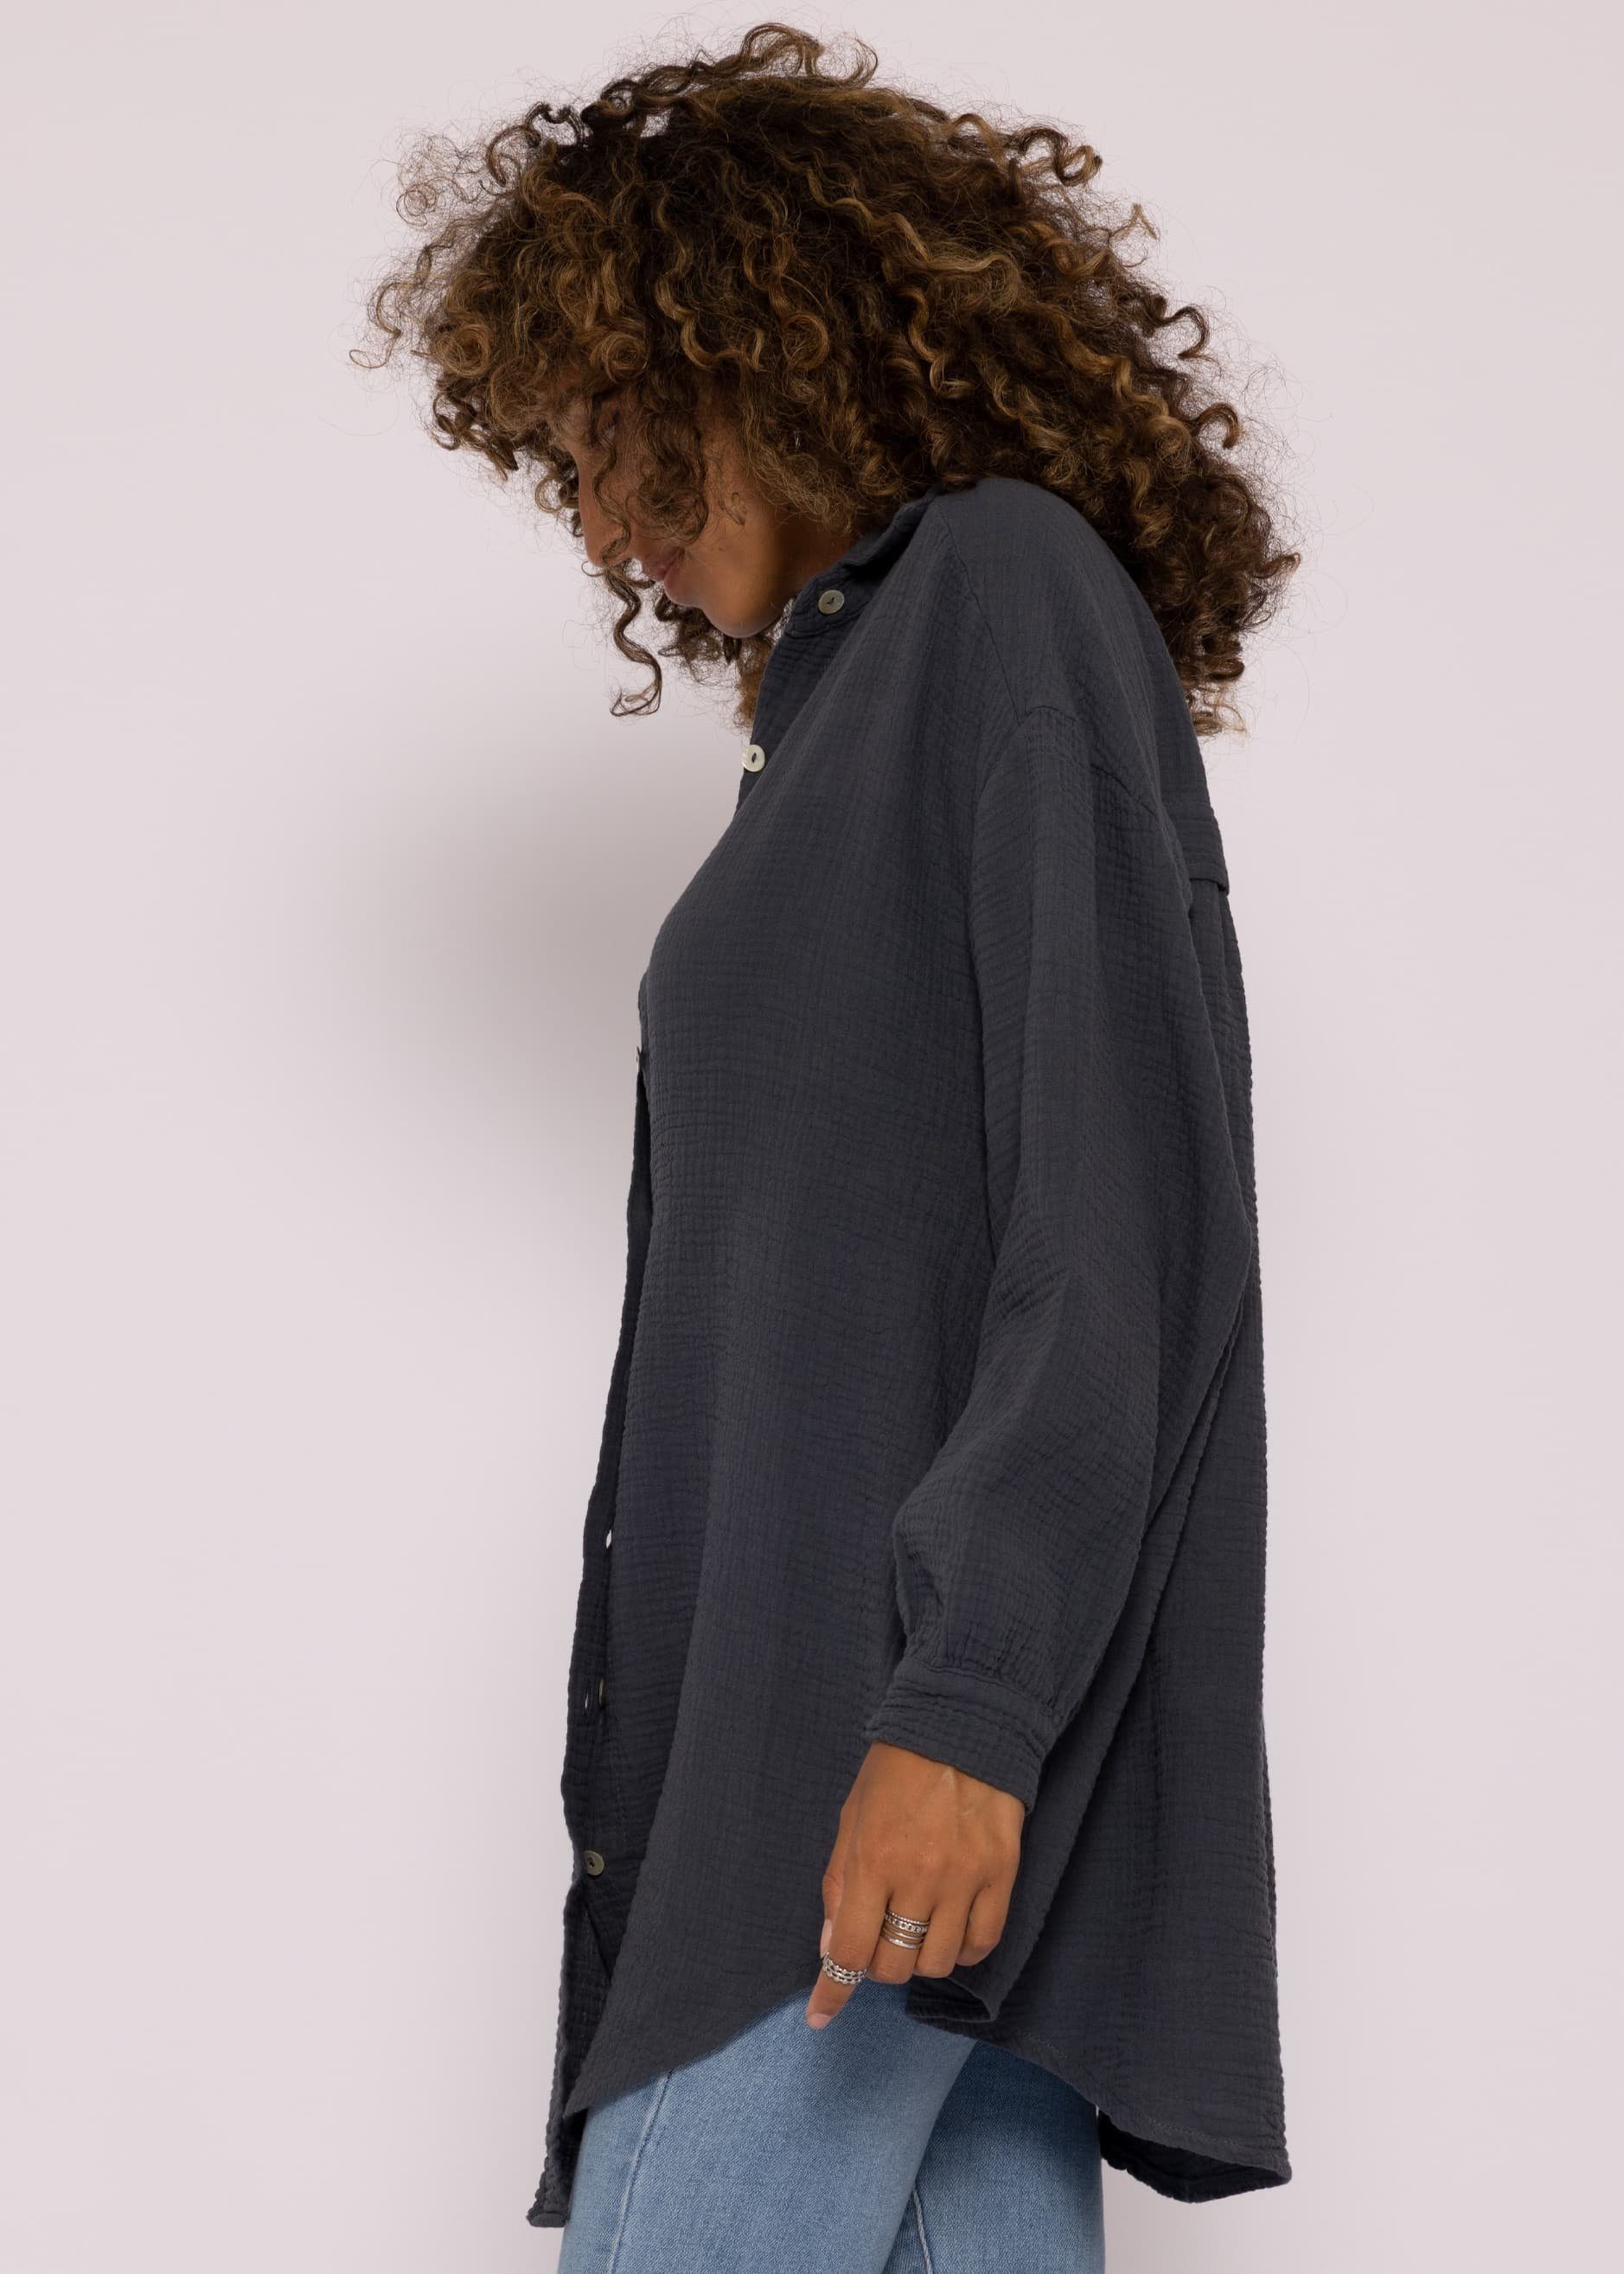 Bluse One Longbluse Baumwolle mit (Gr. 36-48) Dunkelgrau Damen V-Ausschnitt, Langarm lang Musselin Oversize Size aus SASSYCLASSY Hemdbluse